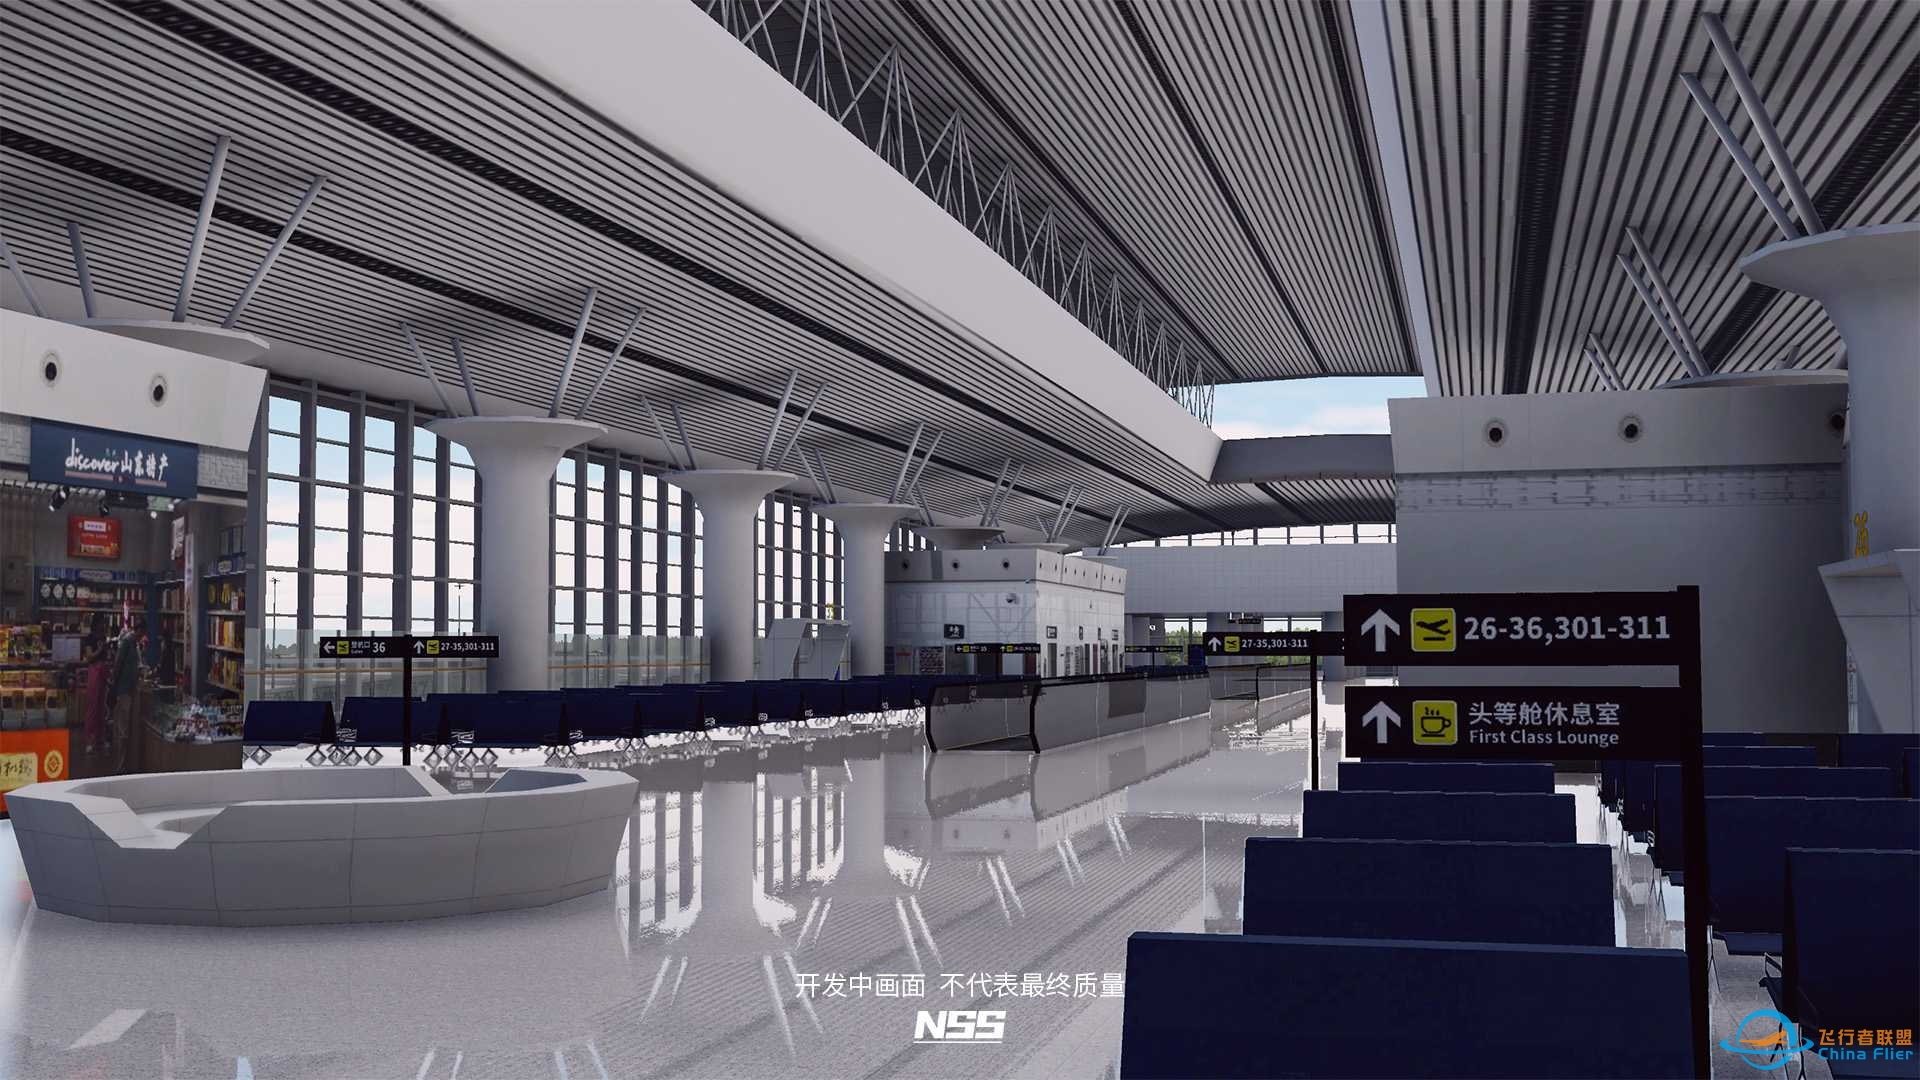 NSS地景开发组 | ZSJN | 济南遥墙国际机场项目最新进展-6917 